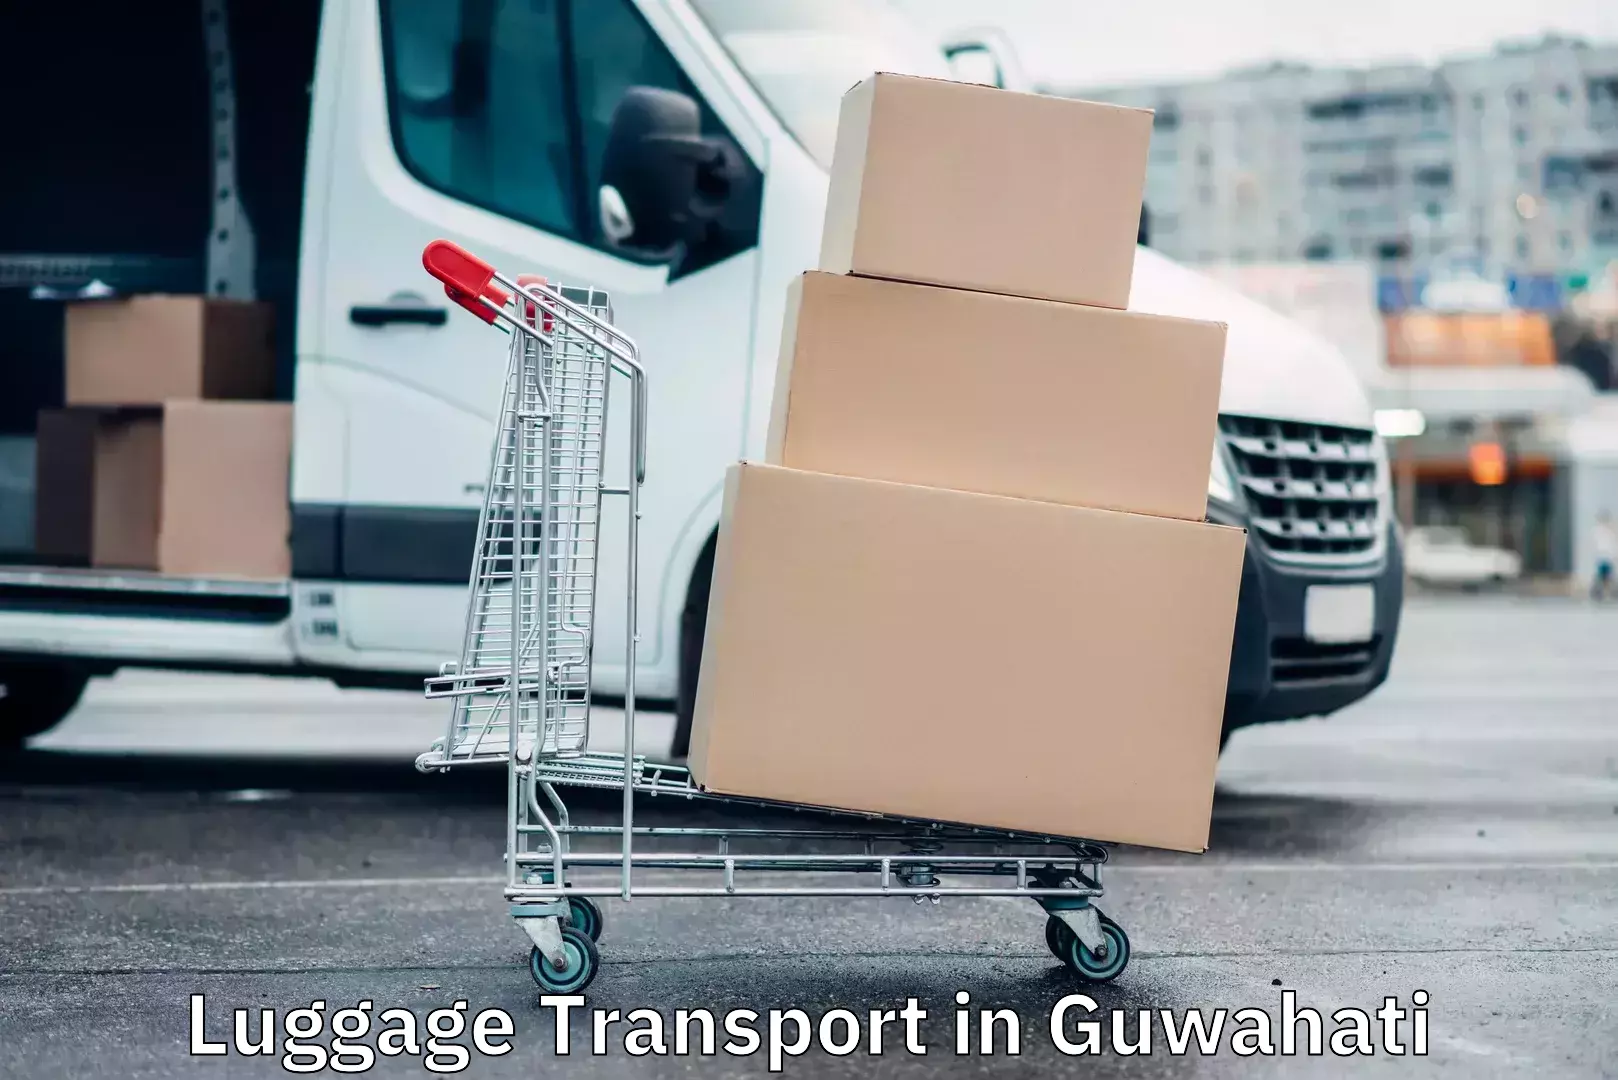 Baggage transport management in Guwahati